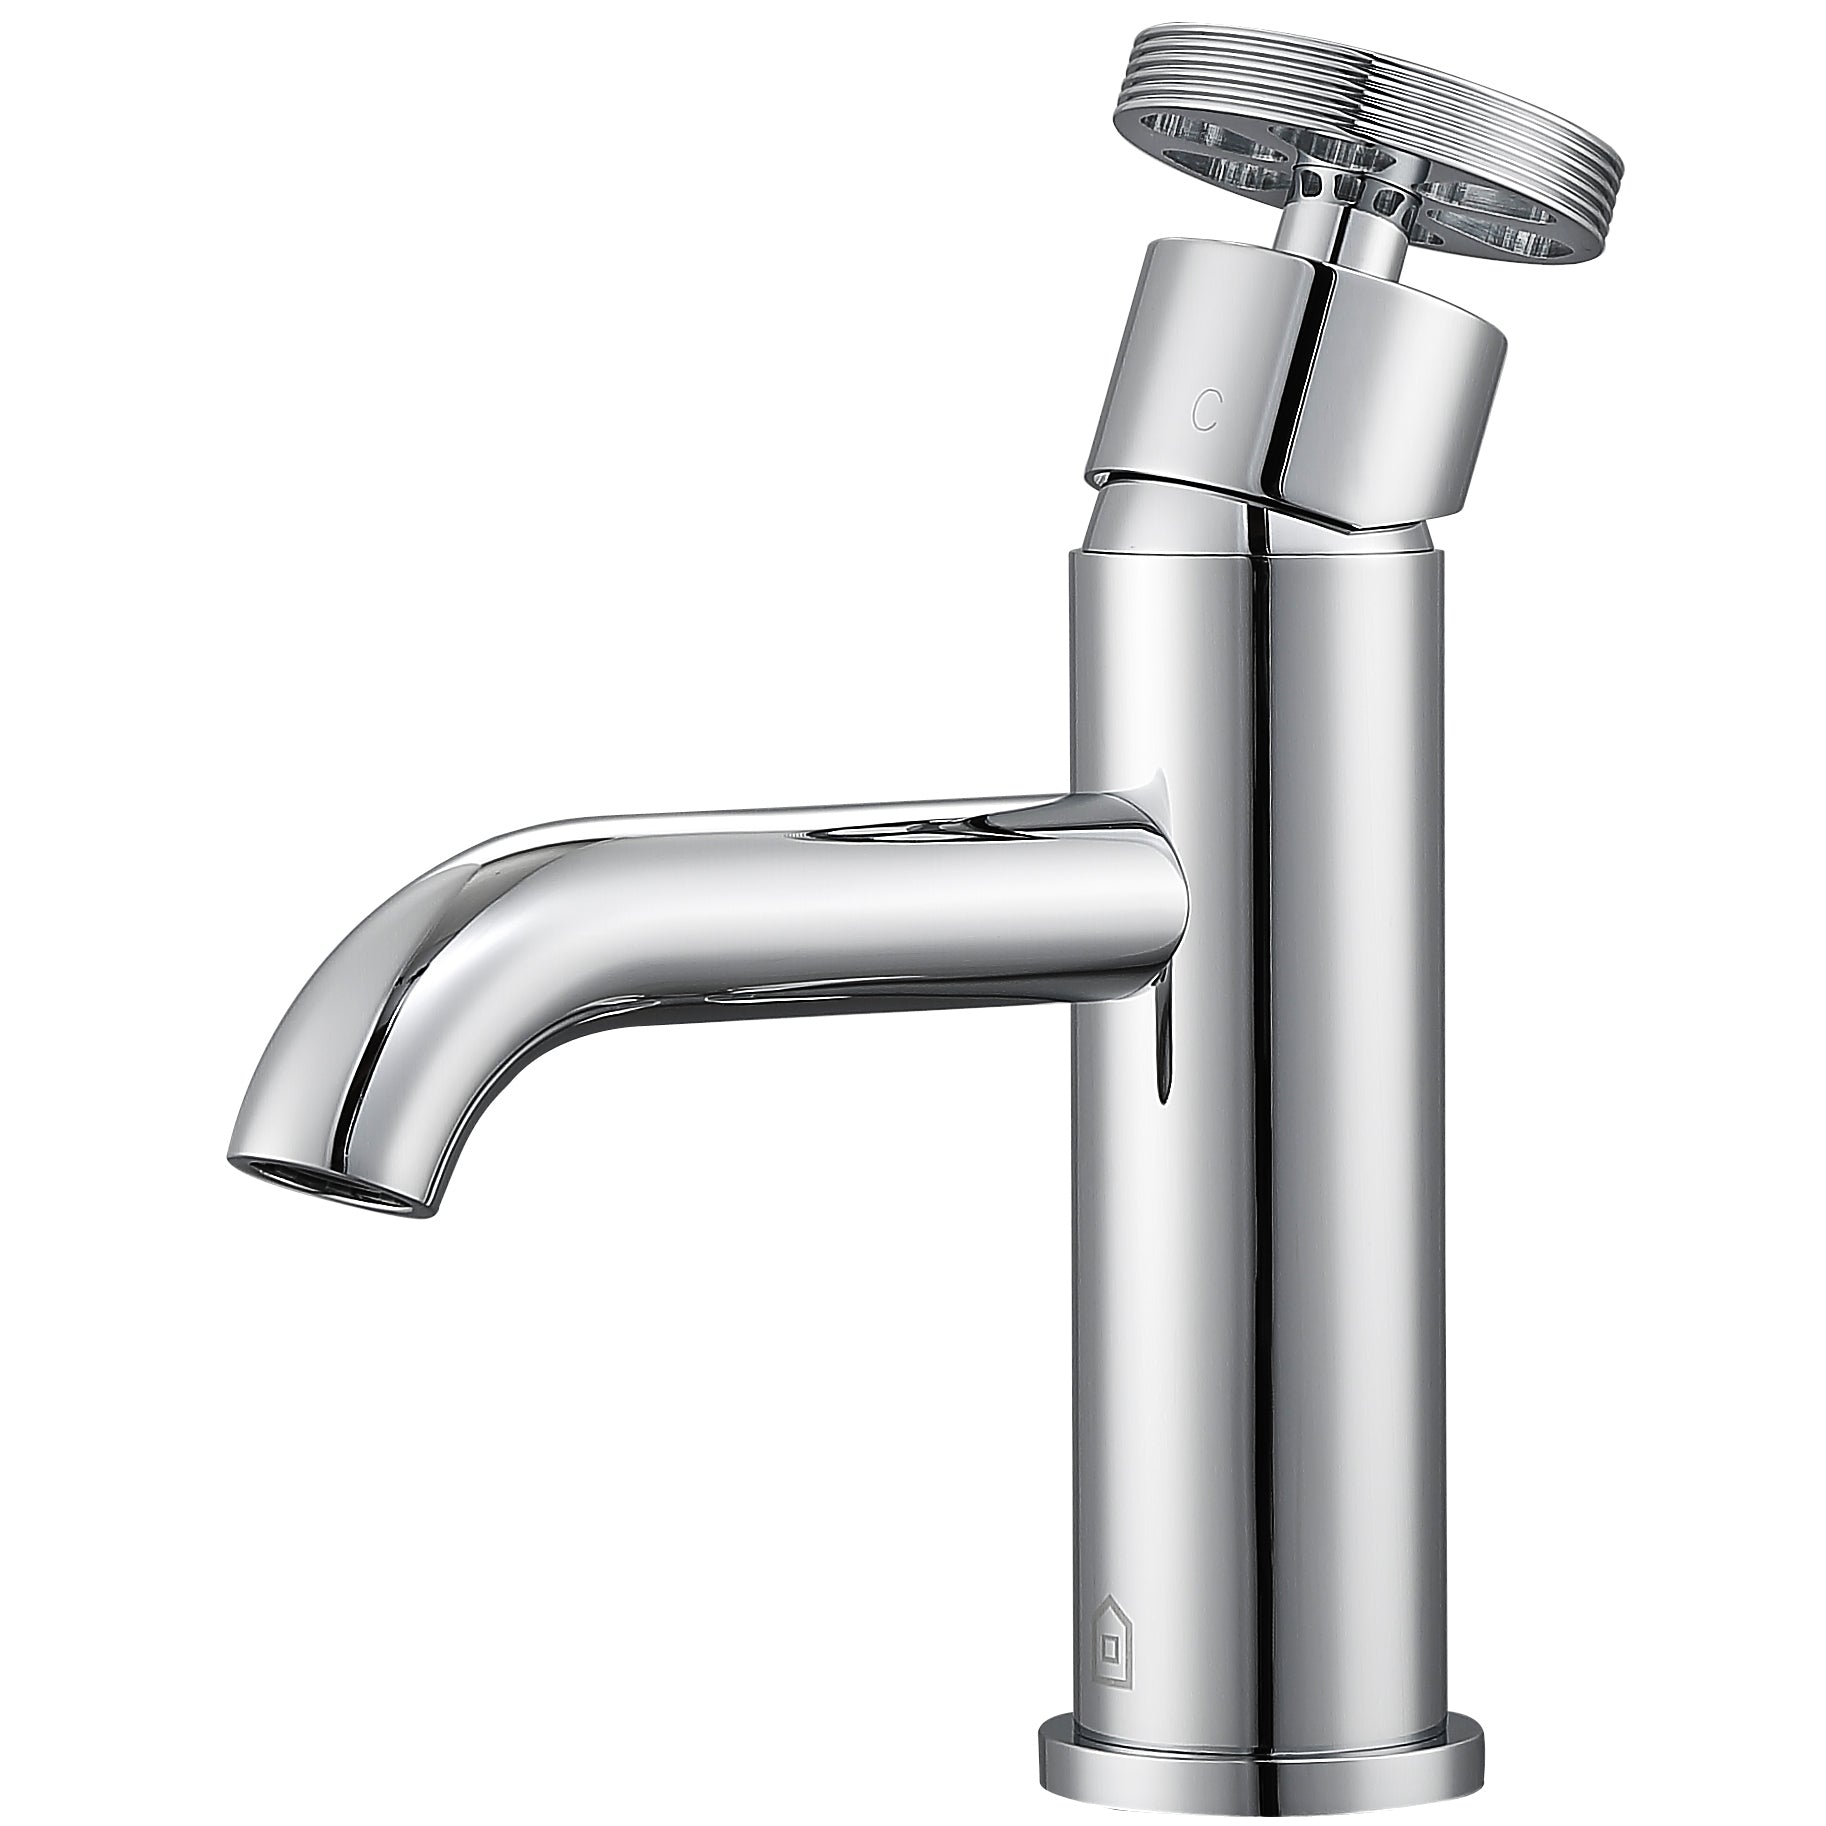 Ancona Nova Series Single Lever Bathroom Faucet in Chrome